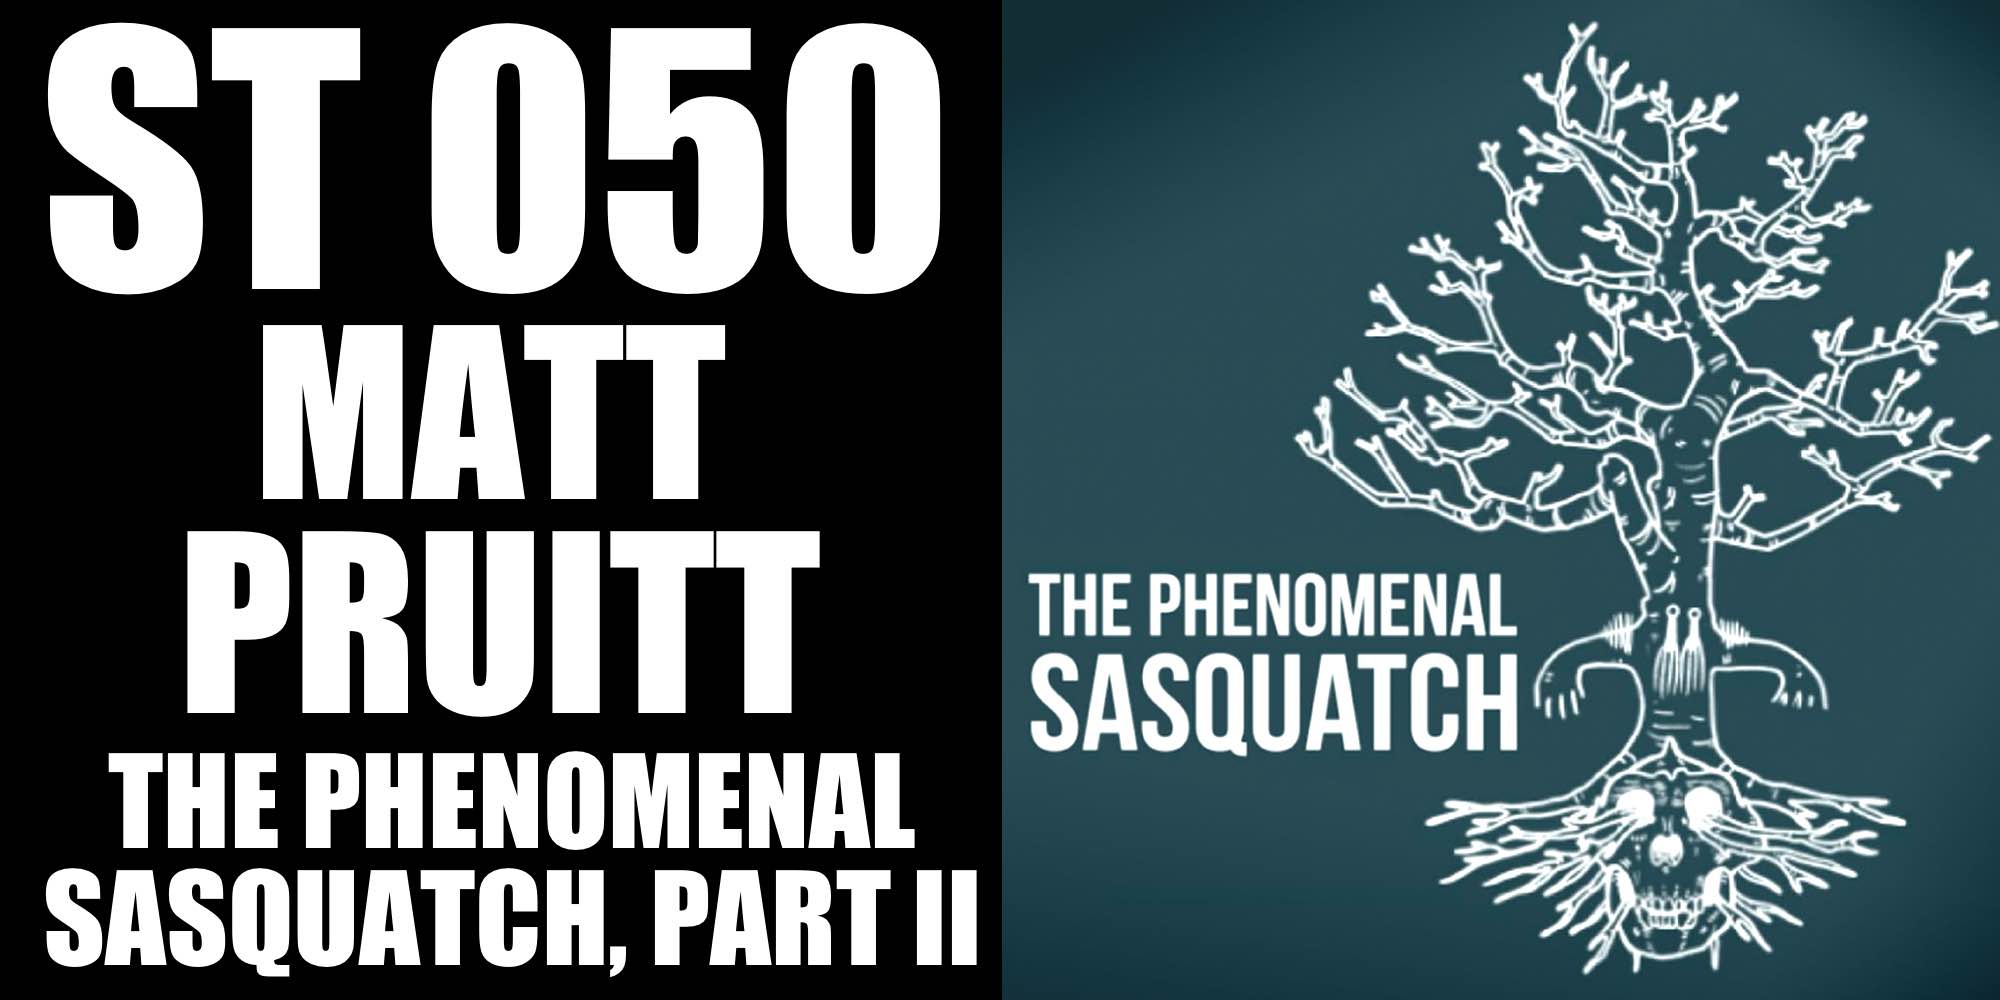 The Phenomenal Sasquatch